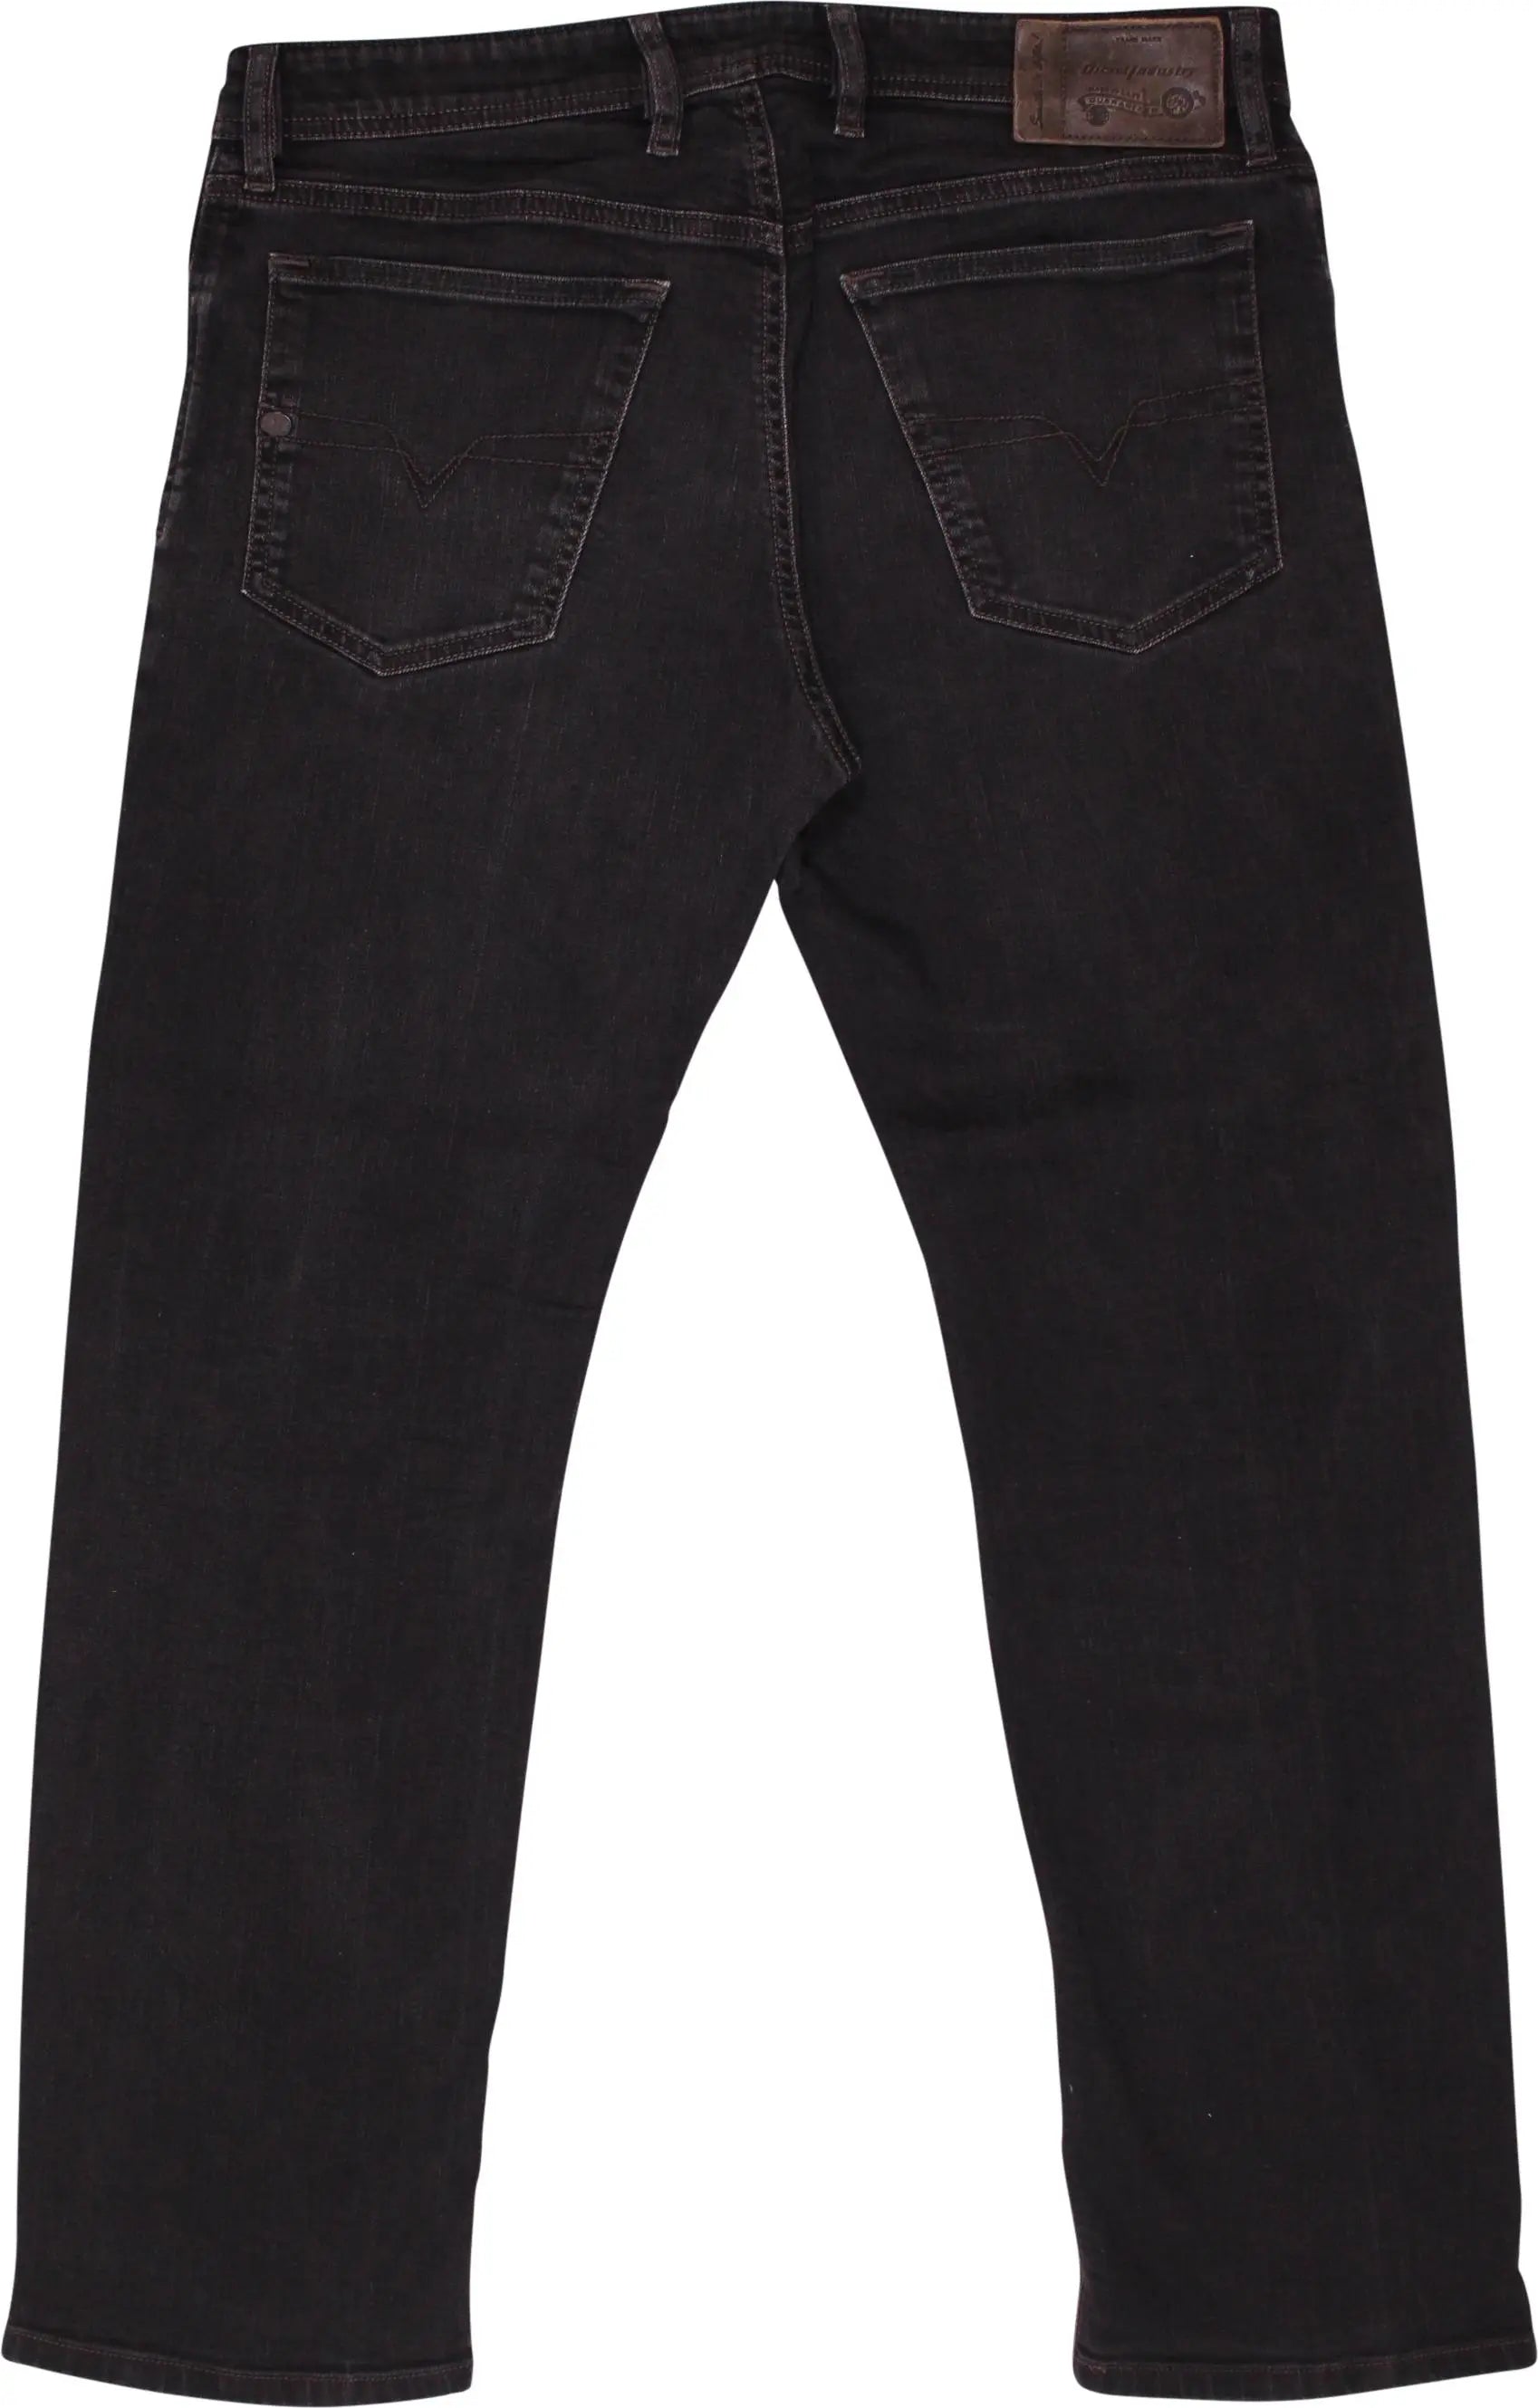 Diesel - Waykee Regular Jeans by Diesel- ThriftTale.com - Vintage and second handclothing